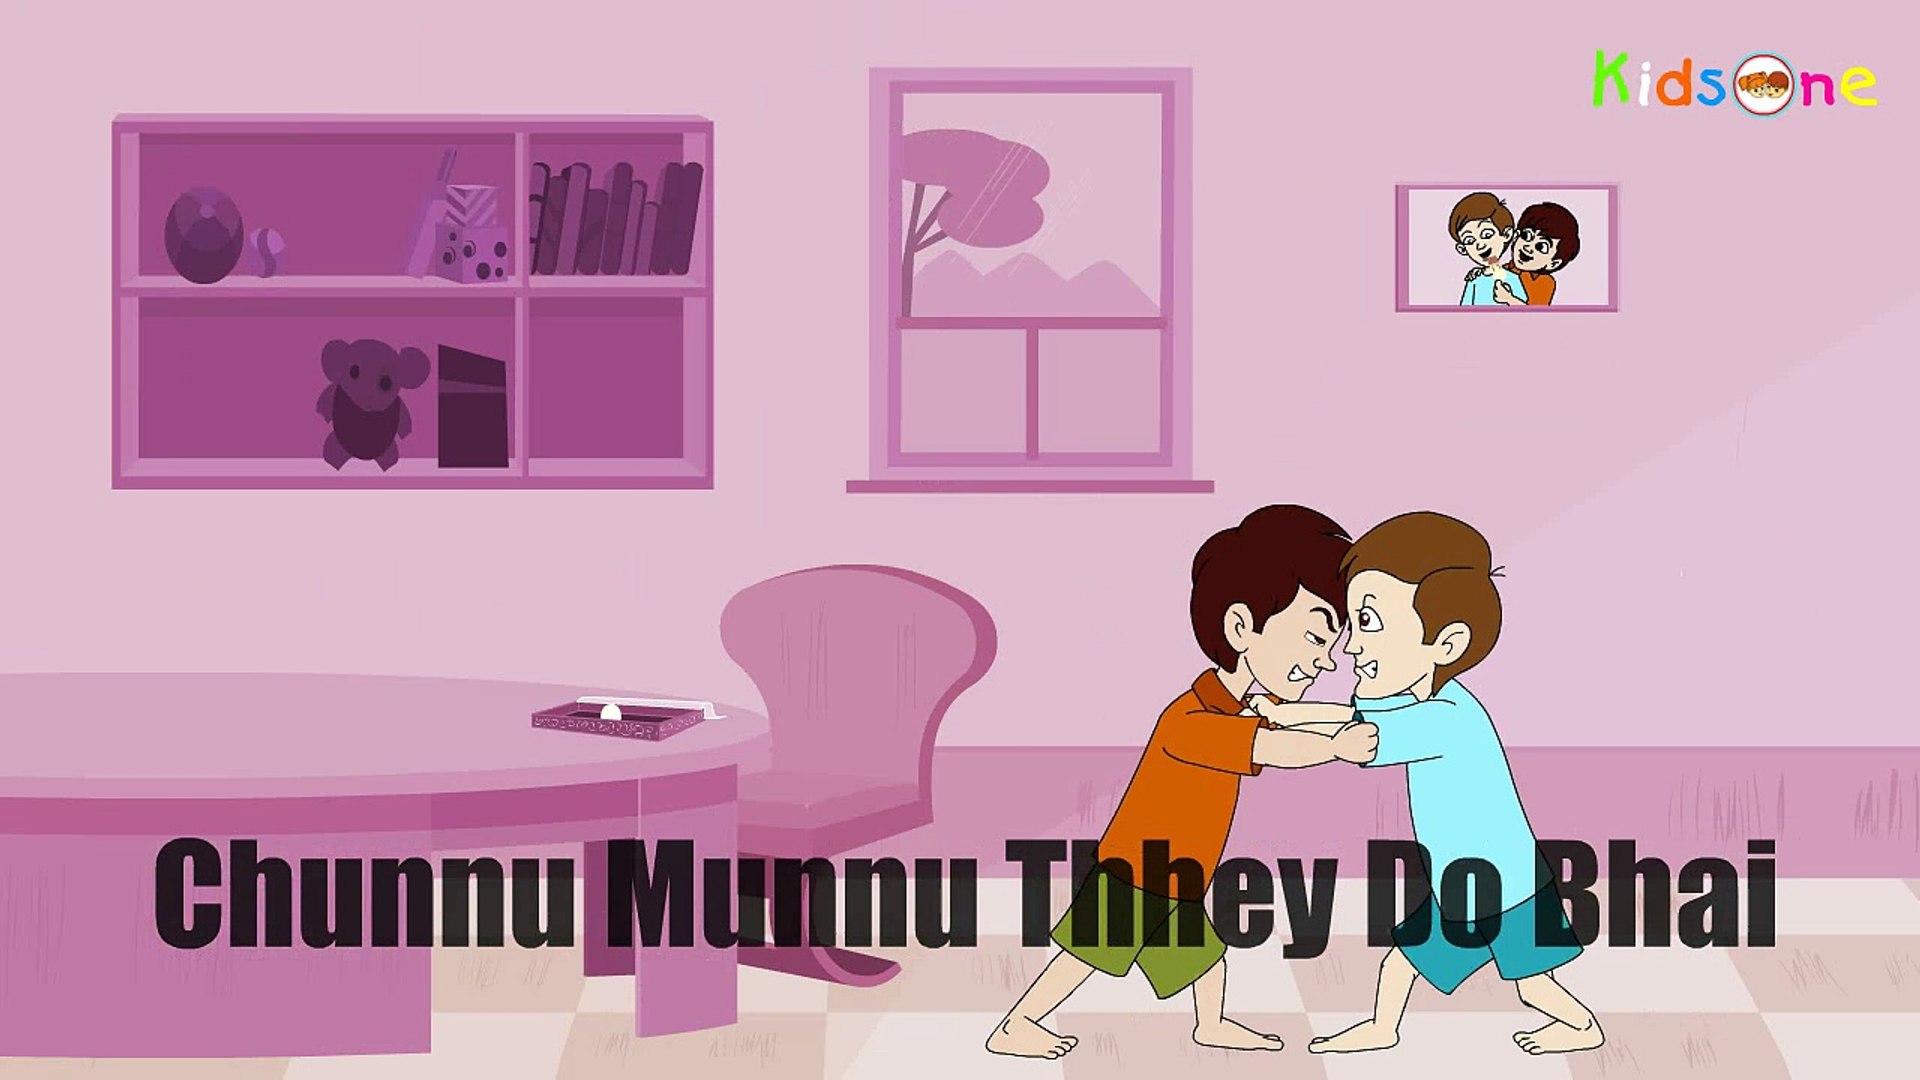 Chunnu Munnu Thhey Do Bhai - Hindi Animated Nursery Rhymes for Kids - video  Dailymotion